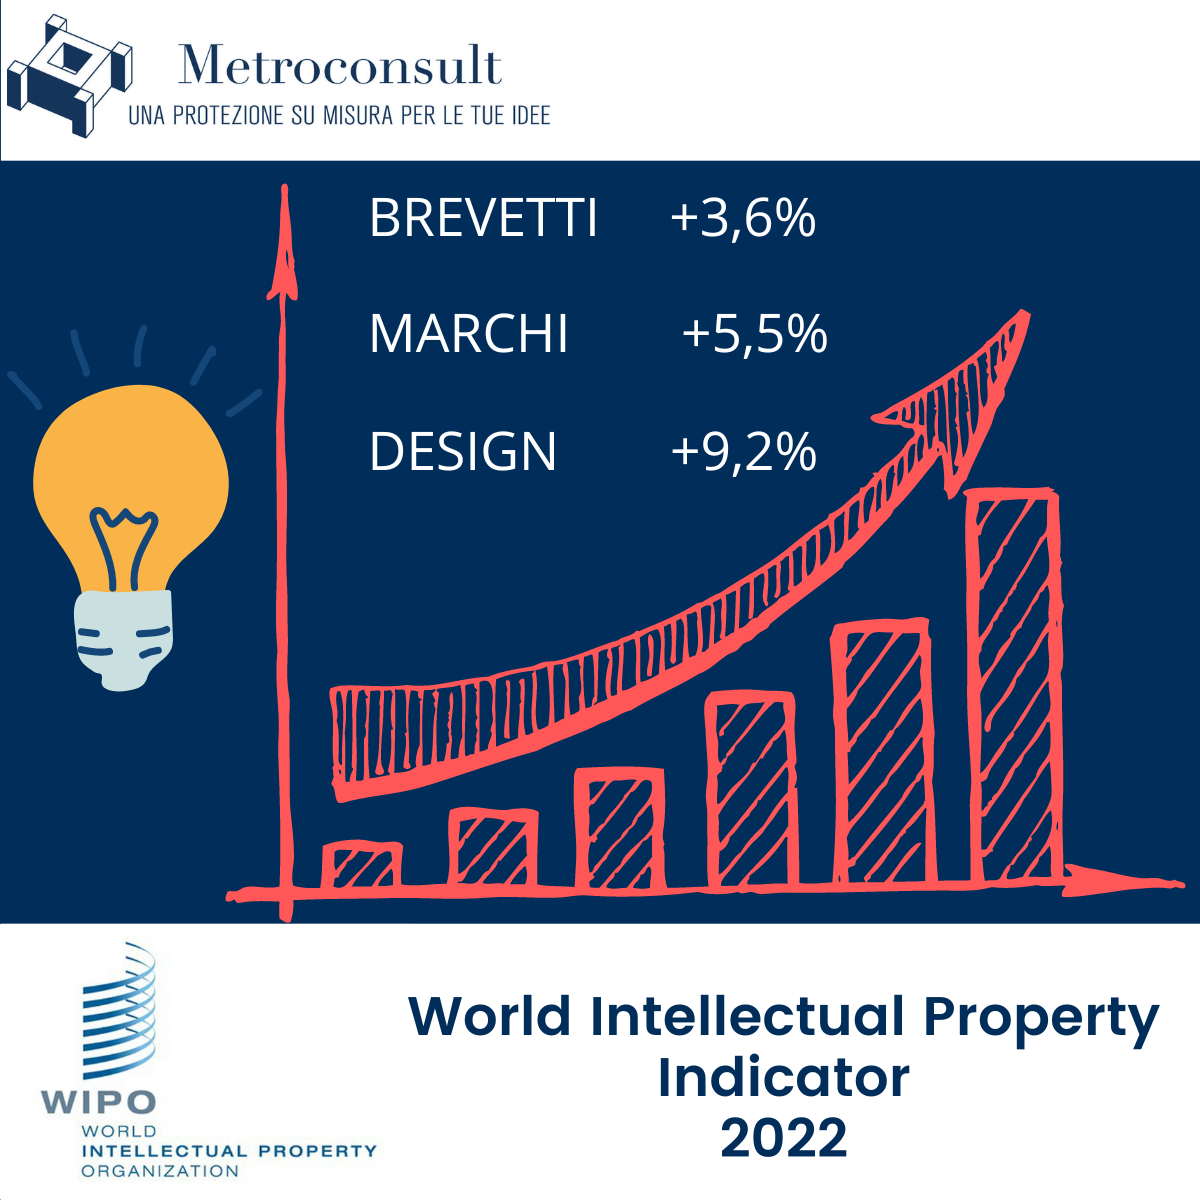 2022 World Intellectual Property Indicator Metroconsult